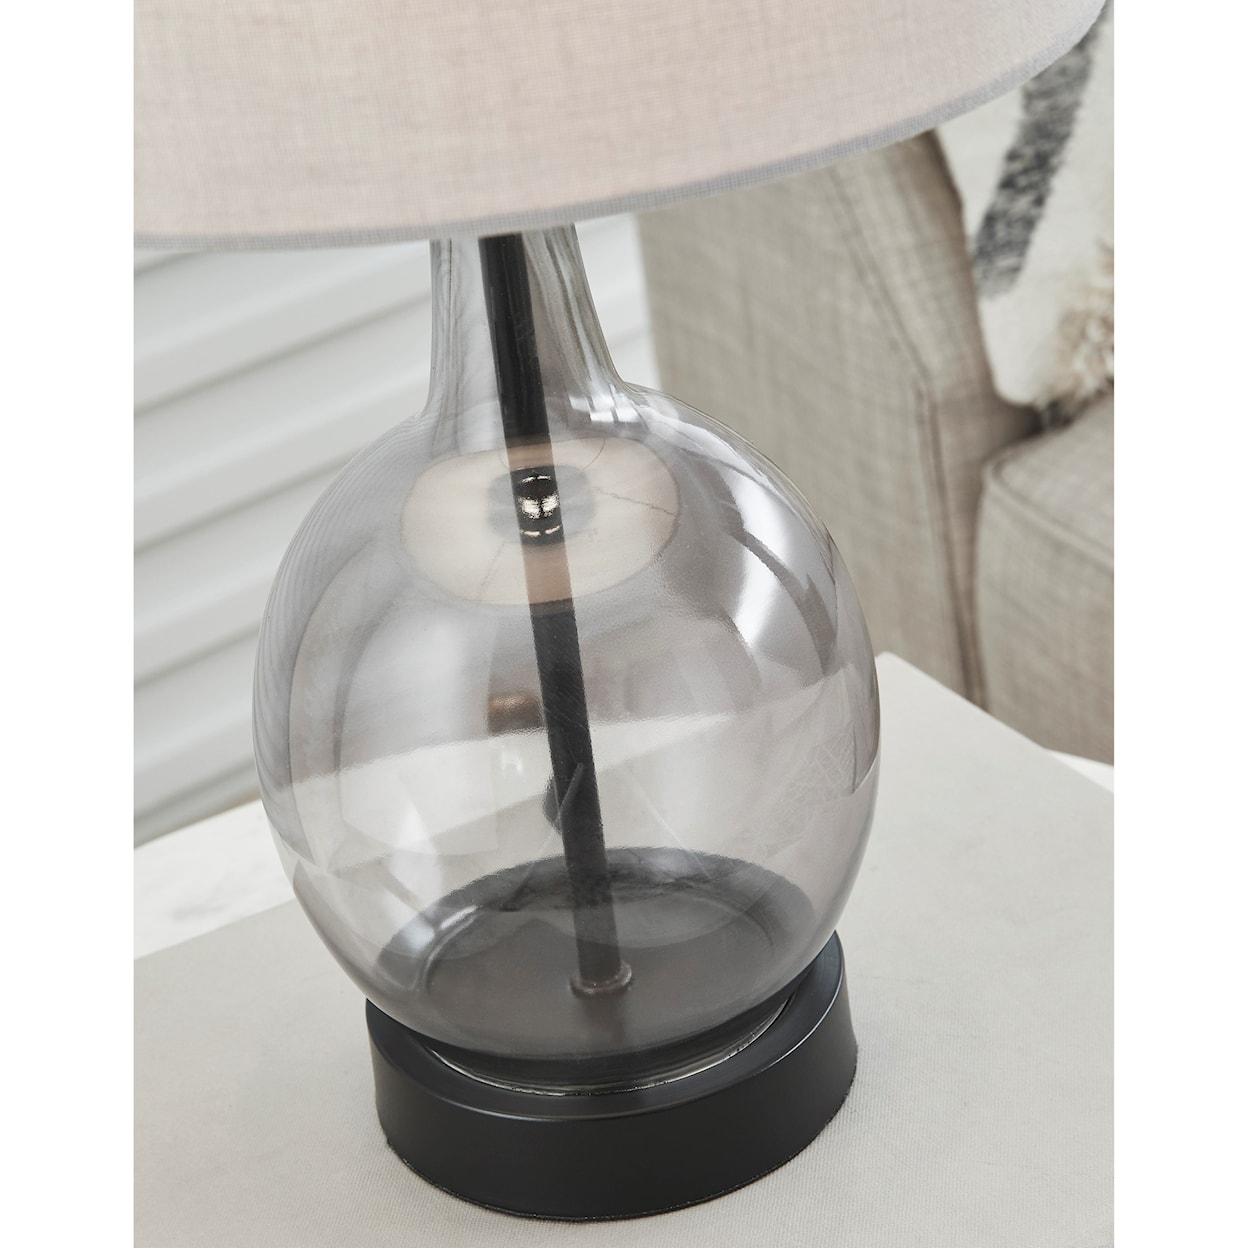 Ashley Furniture Signature Design Lamps - Casual Arlomore Gray Glass Table Lamp